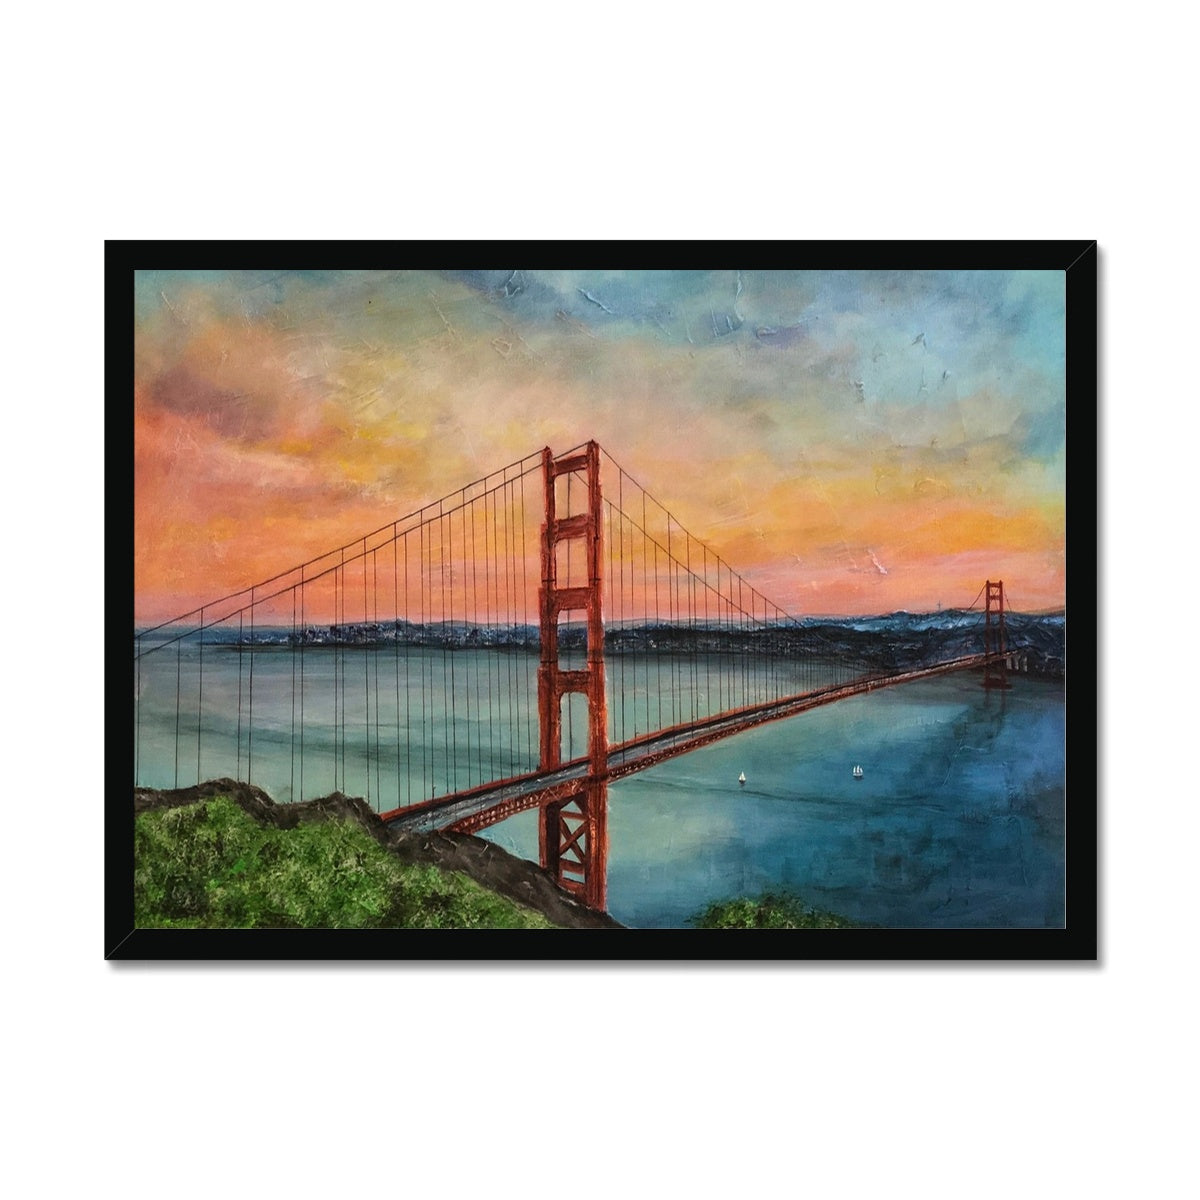 The Golden Gate Bridge Painting | Framed Prints From Scotland-Framed Prints-World Art Gallery-A2 Landscape-Black Frame-Paintings, Prints, Homeware, Art Gifts From Scotland By Scottish Artist Kevin Hunter